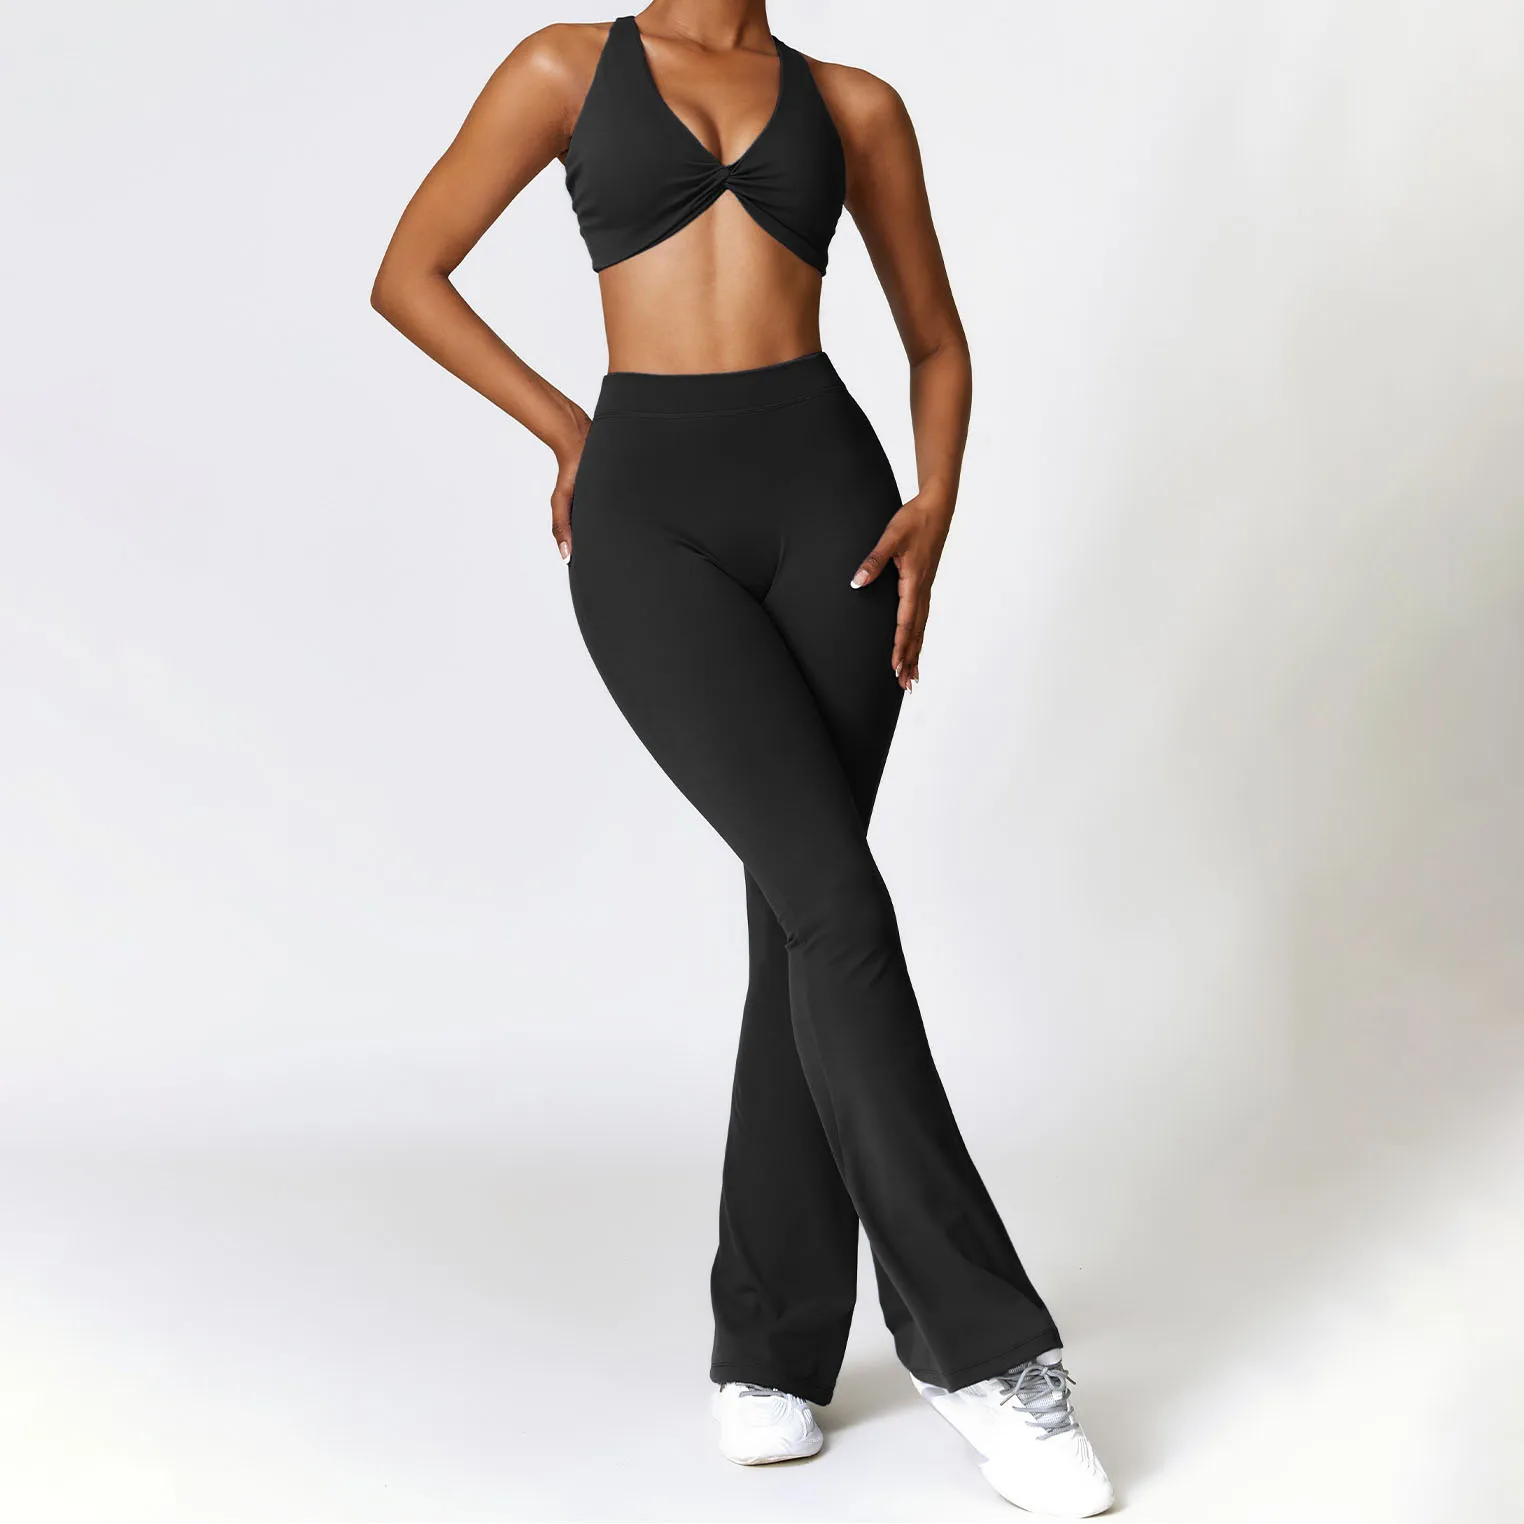 YIYI Quick Dry Comfortable Yoga Sets Beauty Back Bra Leggings Sets Women Fashion Running Fashion Scrunch Leggings And Bra Sets